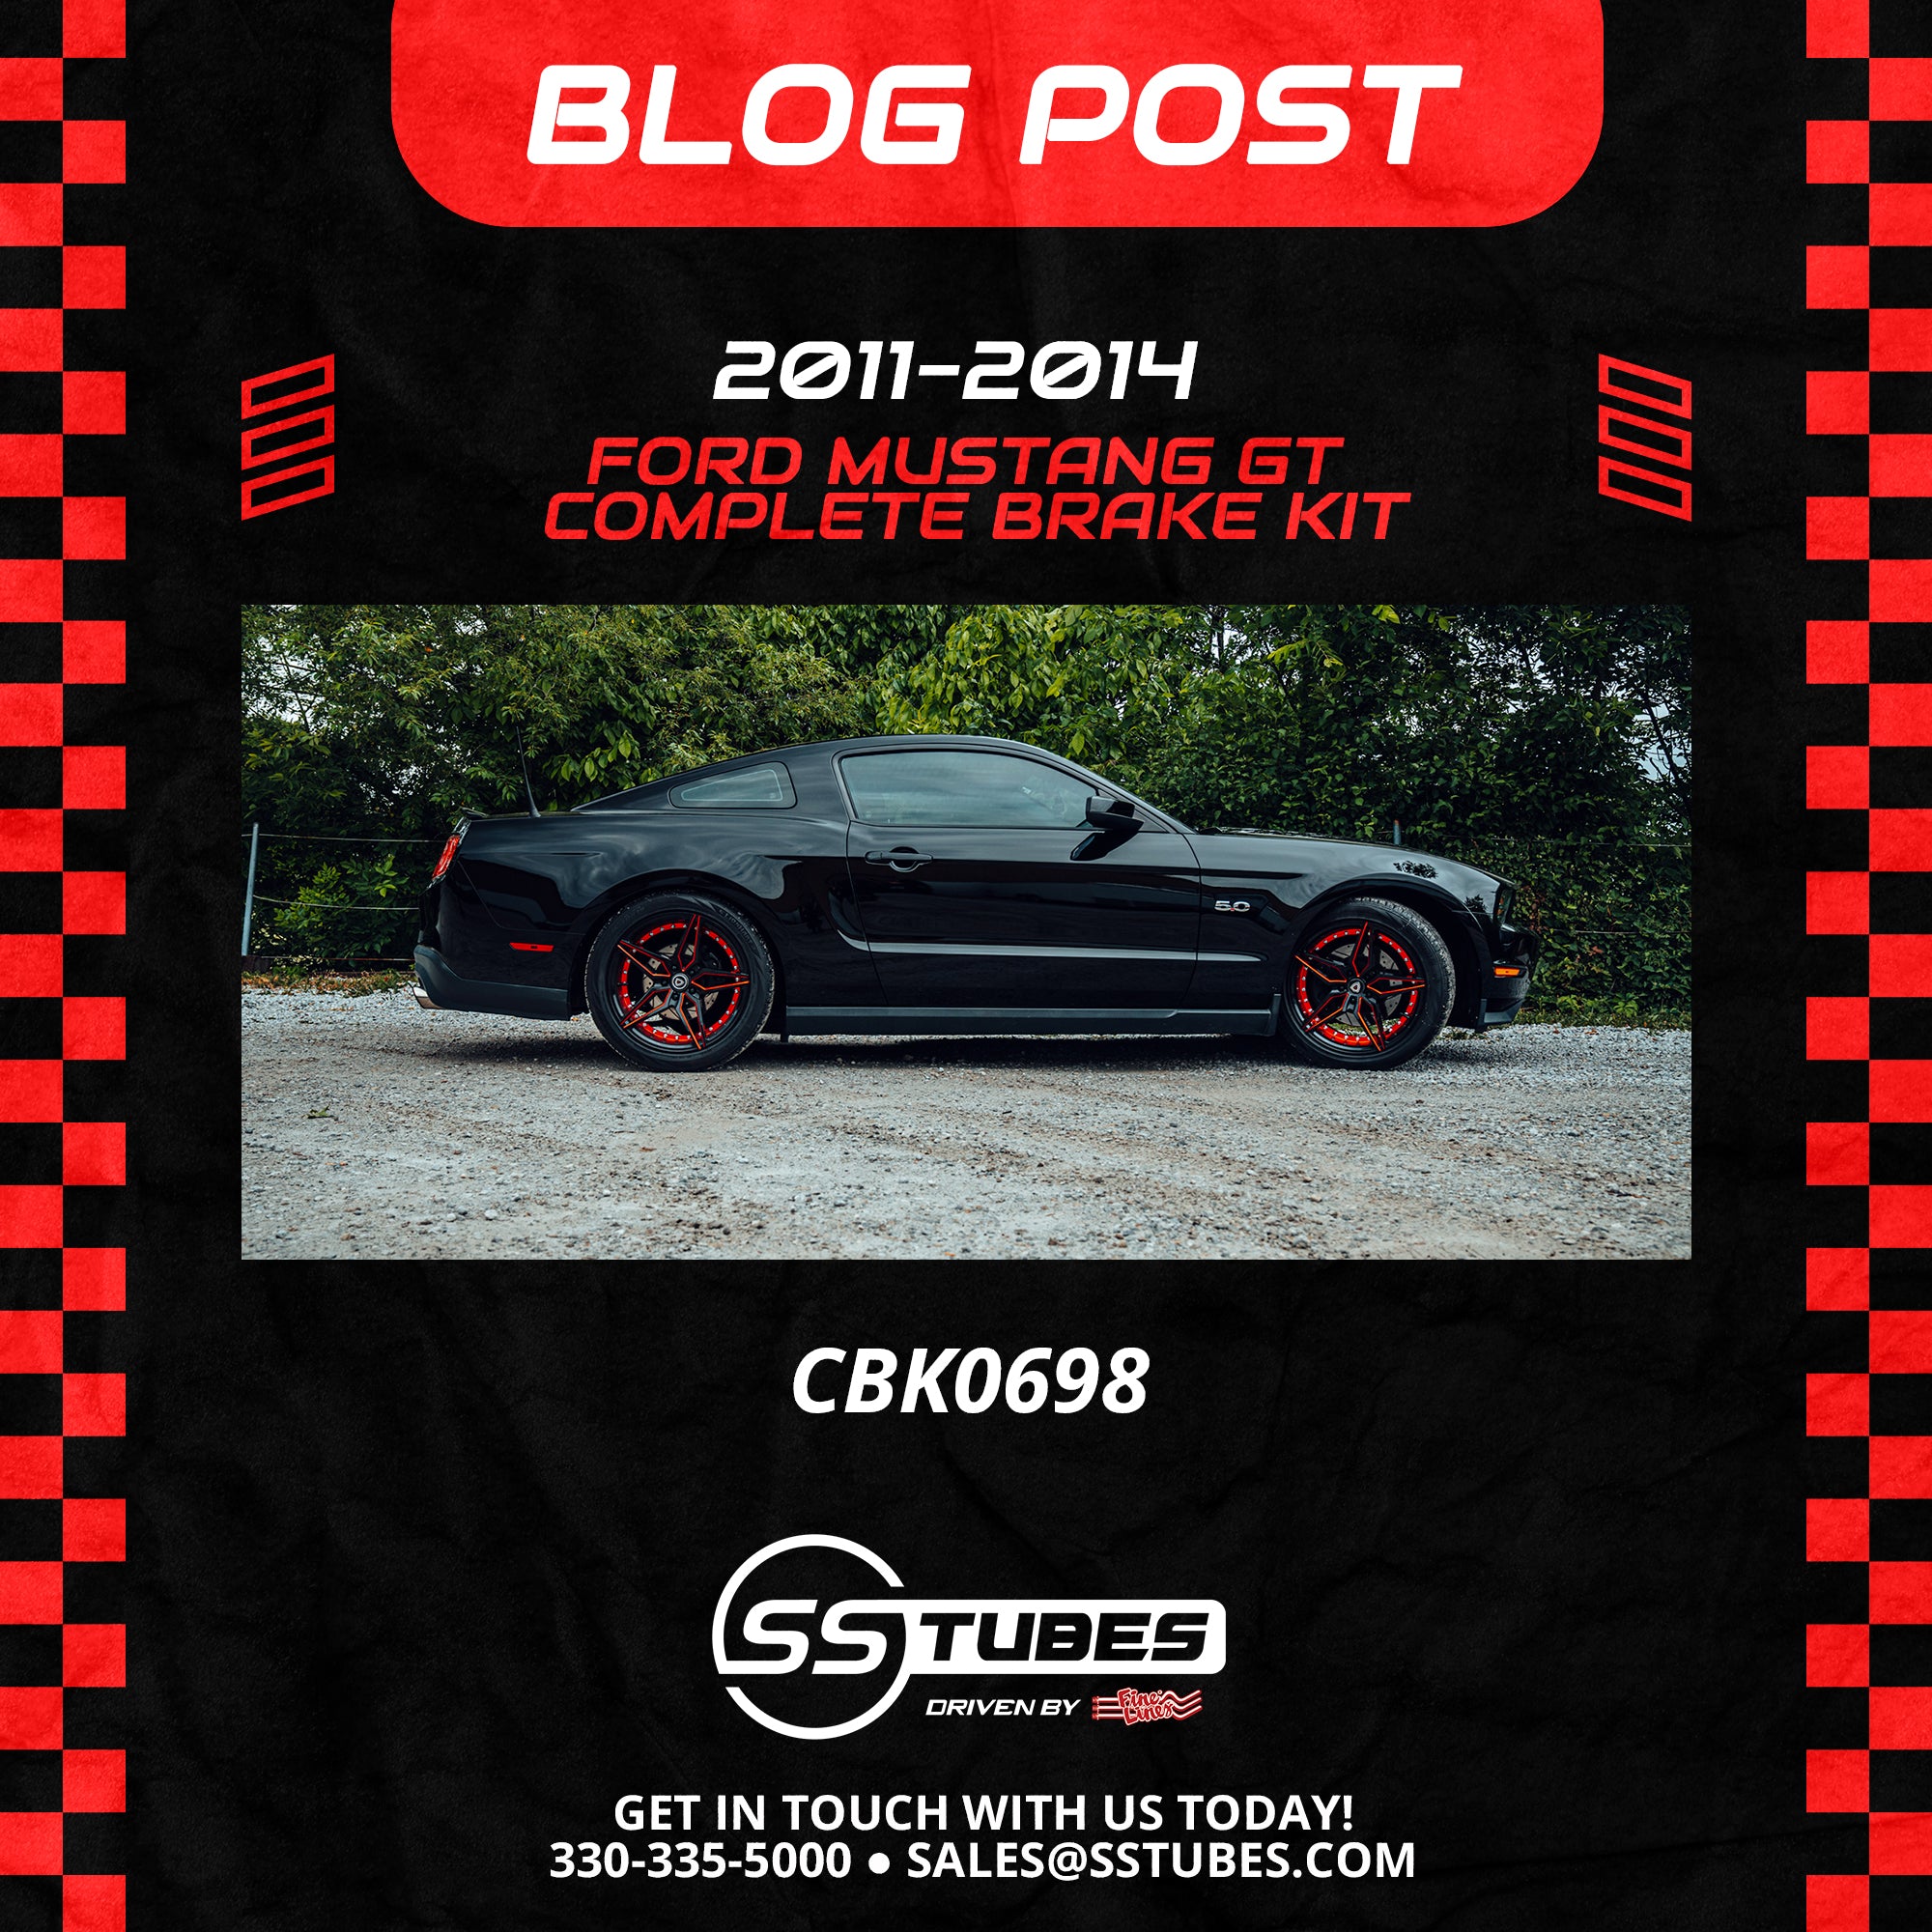 2011-2014 Ford Mustang GT Complete Brake Kit